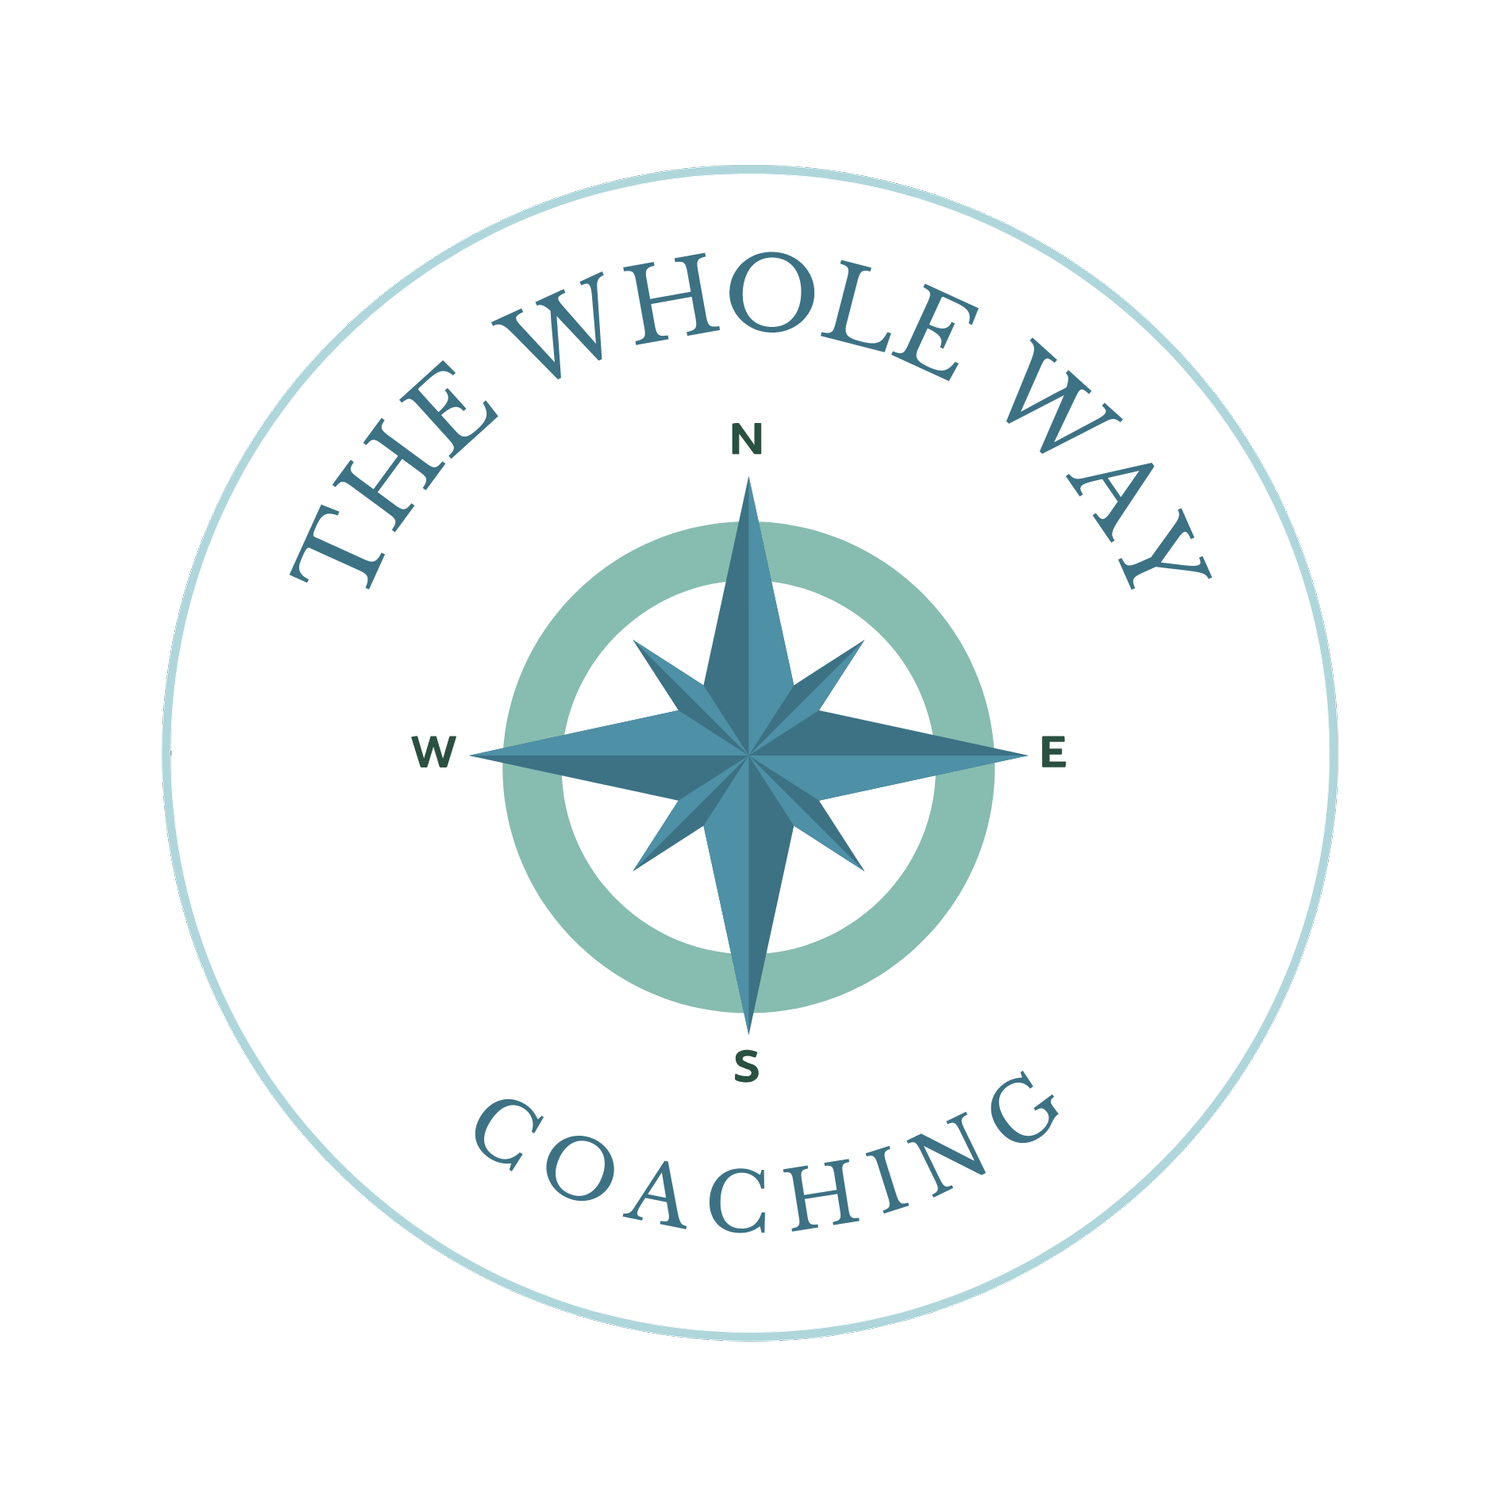 The Whole Way Coaching, LLC